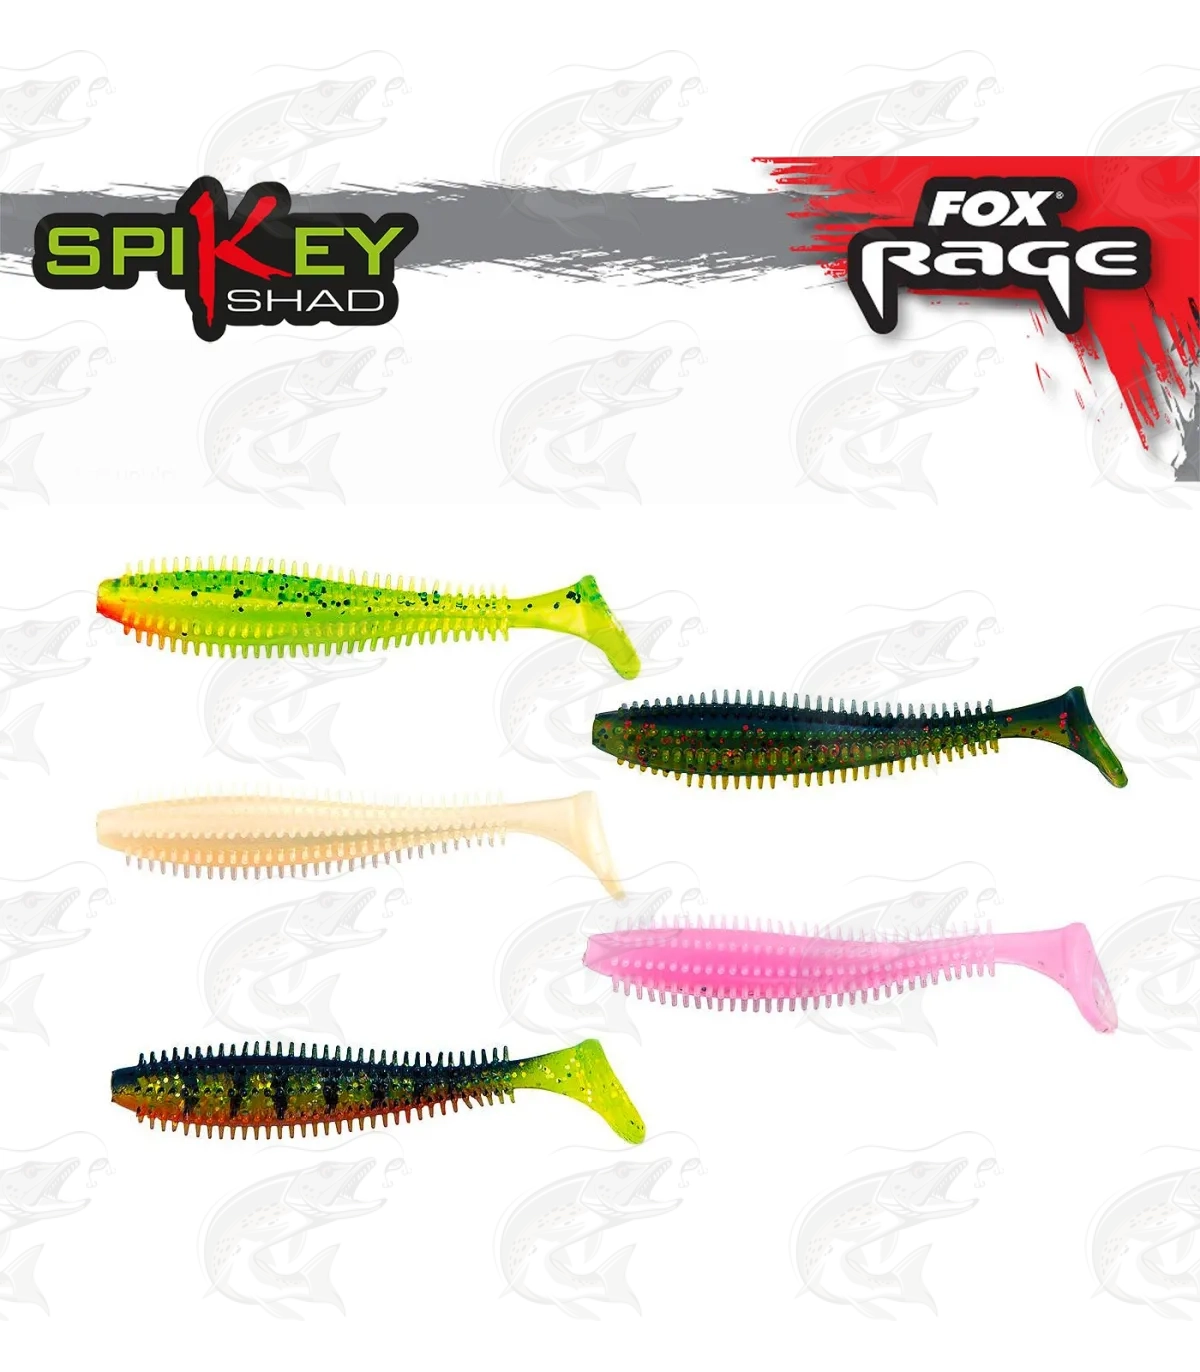 Fox Rage Spikey 9cm Mixed Colours x 5